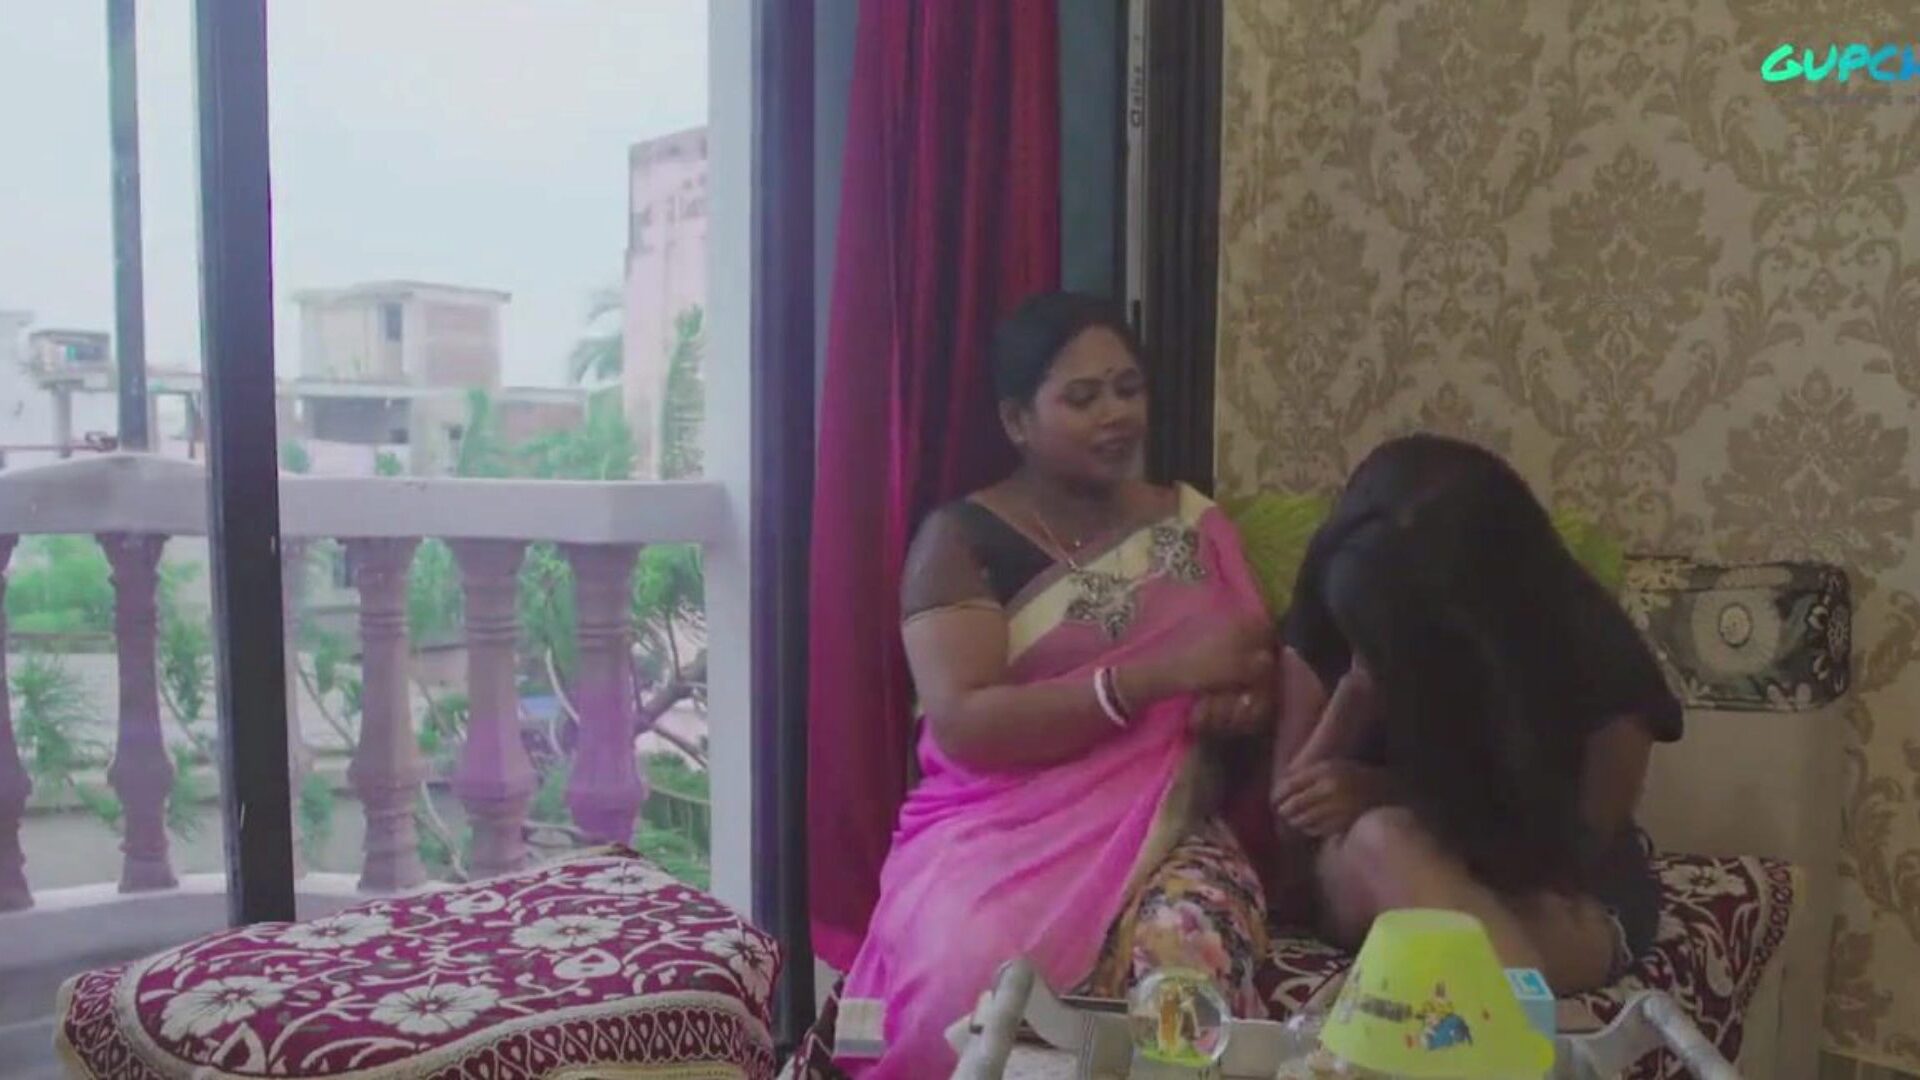 mousi ki gandi nazar: indijski hd porno video 53 - xhamster pogledajte mousi ki gandi nazar tube orgijsku filmsku scenu besplatno za sve na xhamsteru, s najboljom kolekcijom indijskih kratkih hindi, hindi i vrućih kratkih epizoda hd porno filma